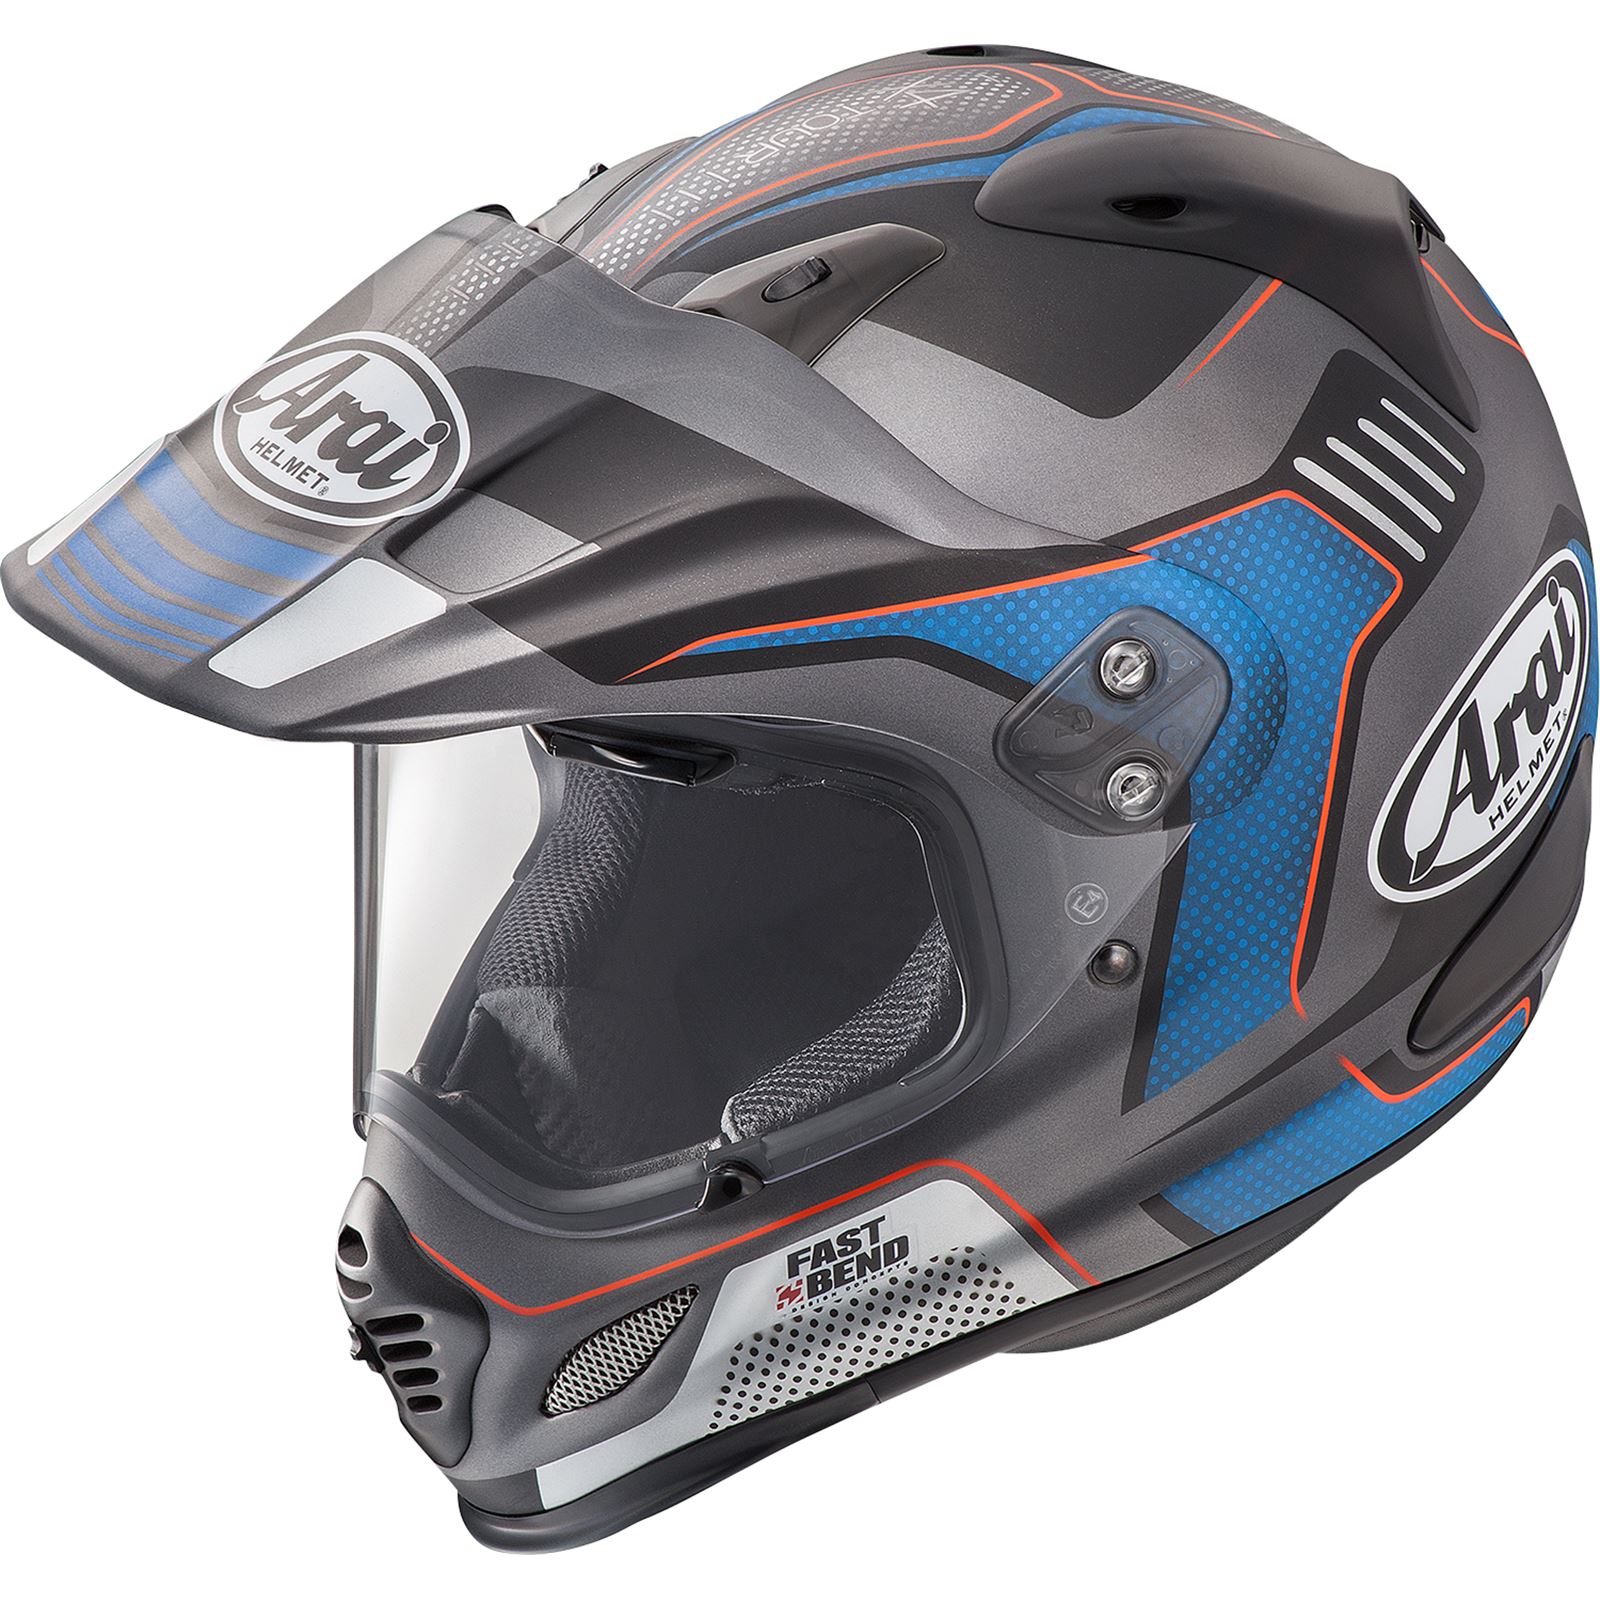 Arai XD-4 Helmet - Vision - Black Frost - Small